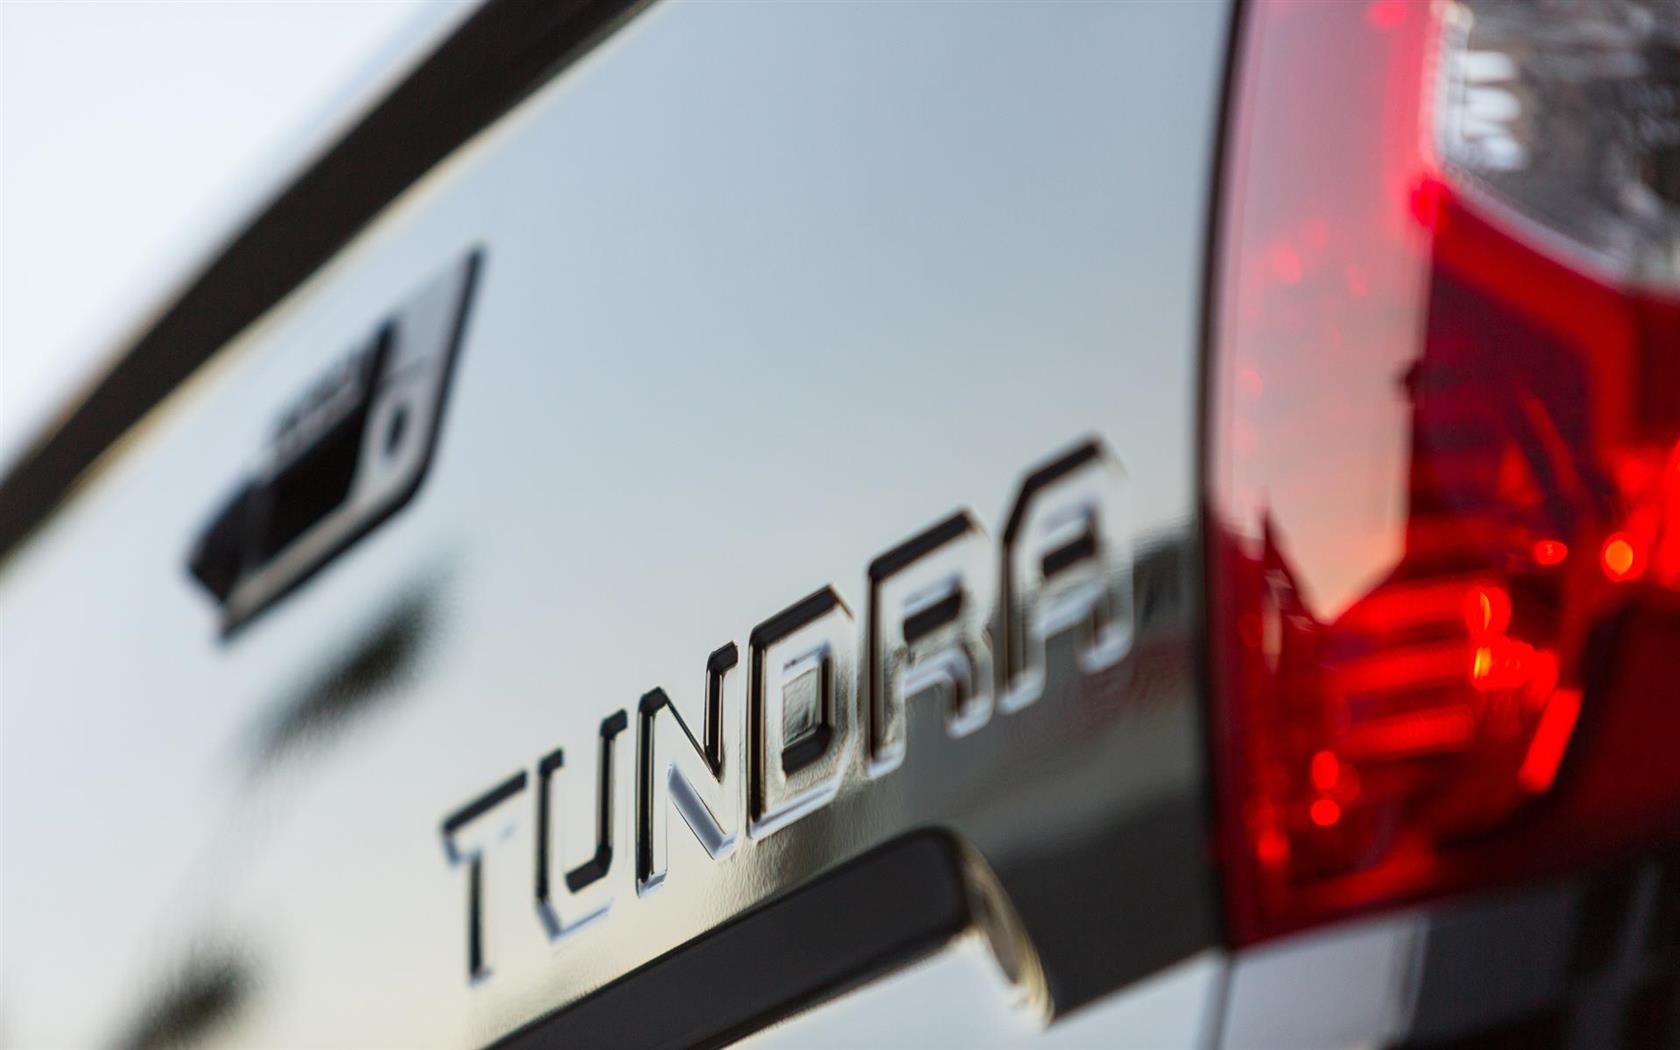 2015 Toyota Tundrasine Concept